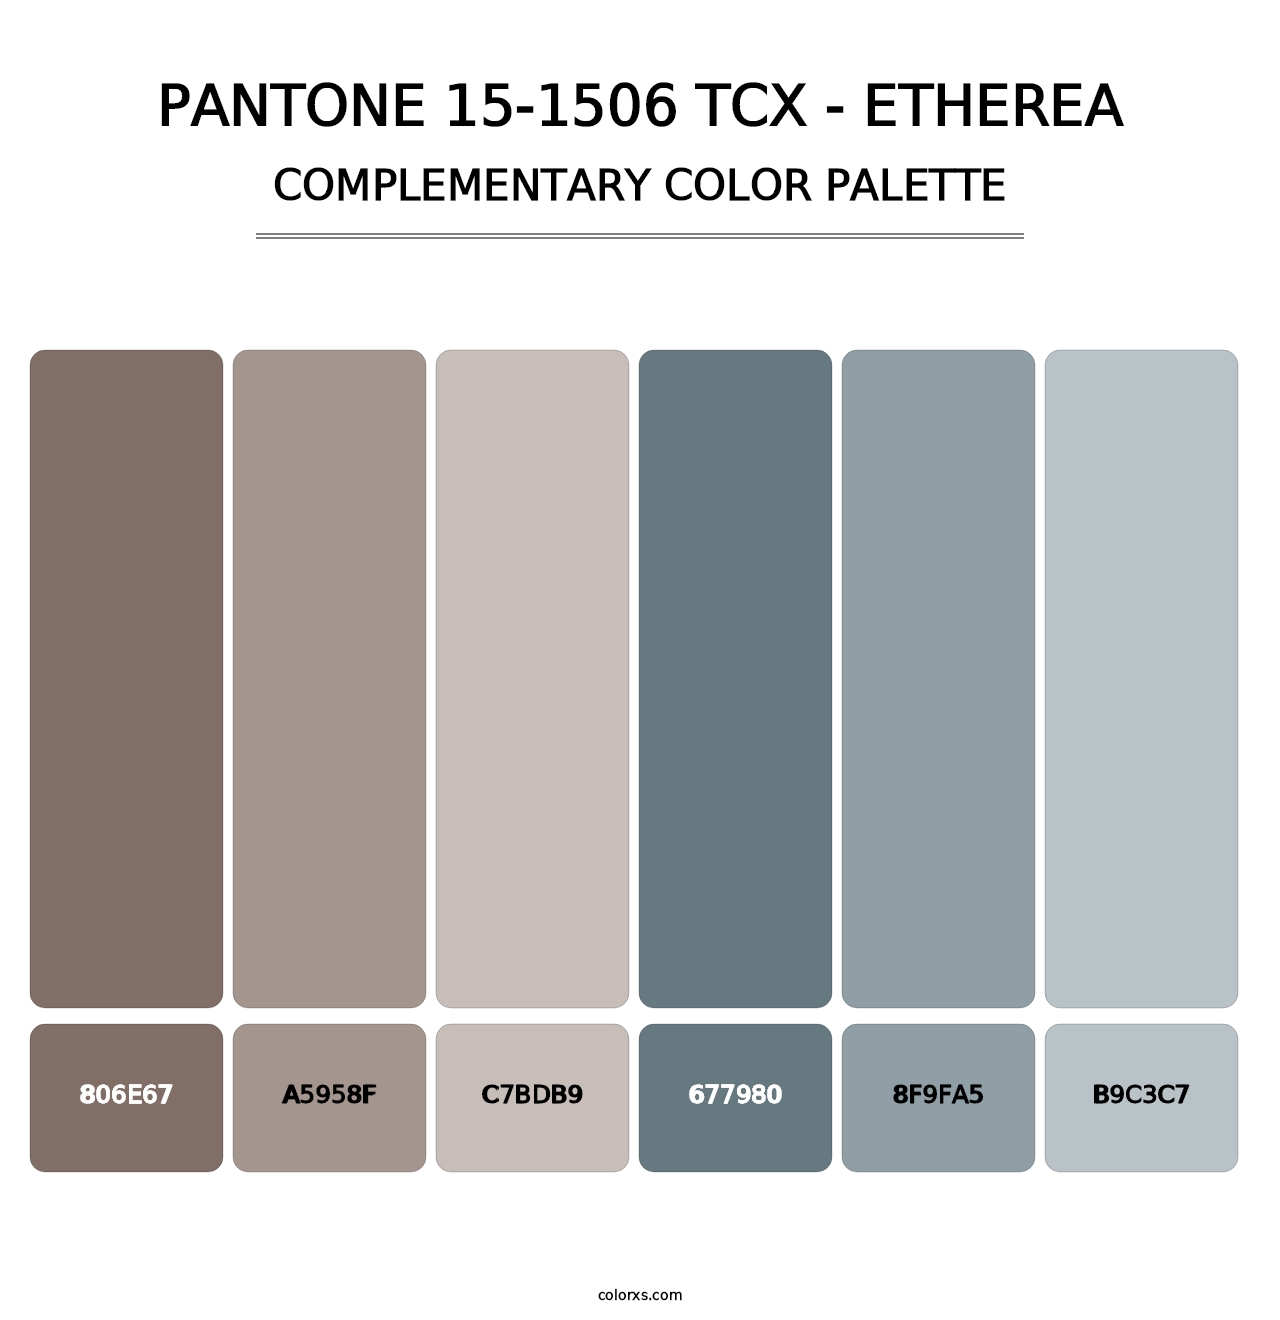 PANTONE 15-1506 TCX - Etherea - Complementary Color Palette